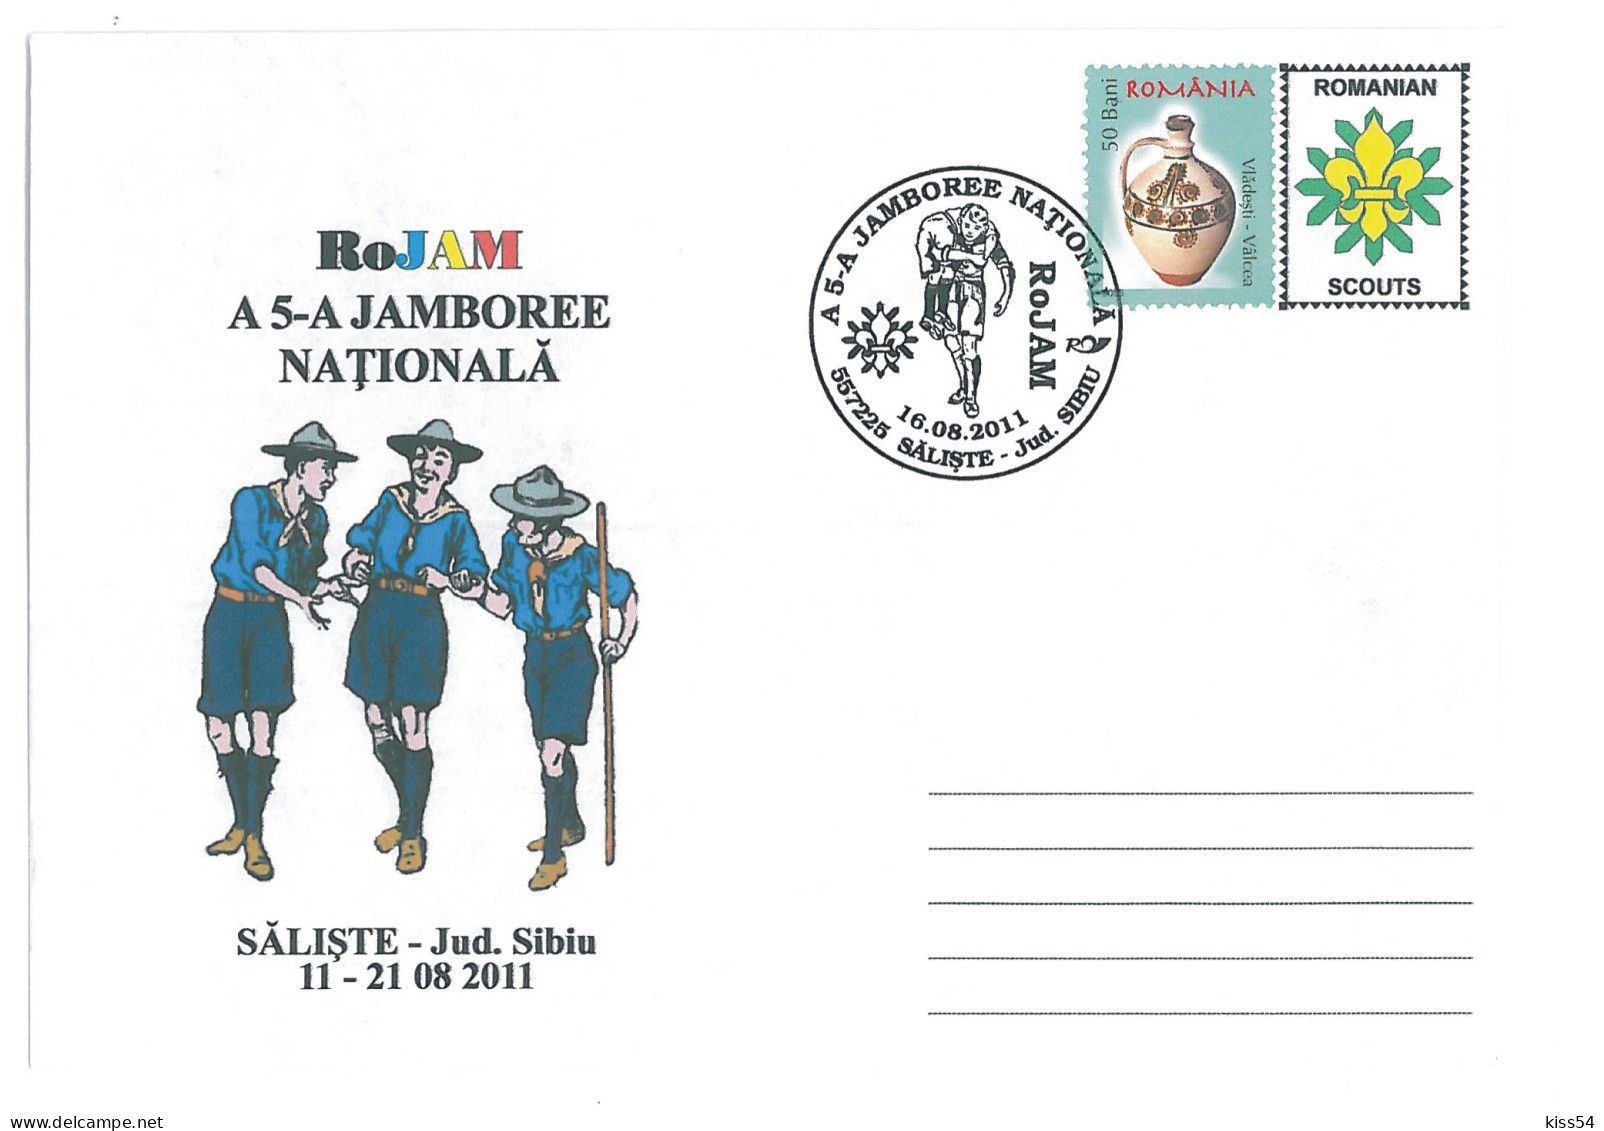 SC 47 - 1303 ROMANIA, National JAMBOREE, Scout - Cover - Used - 2011 - Briefe U. Dokumente